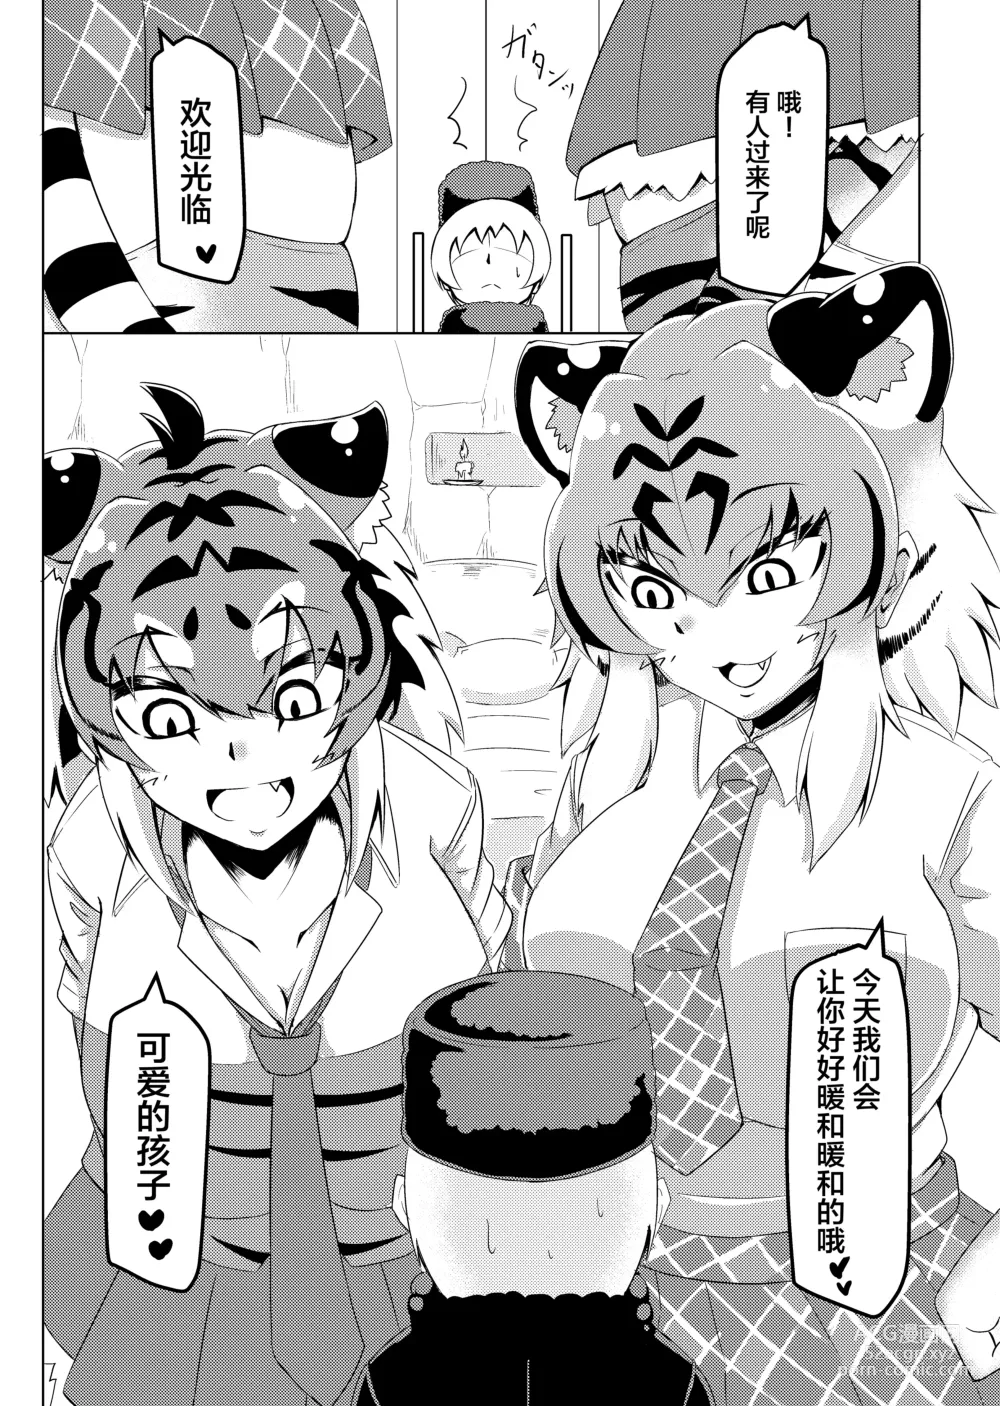 Page 3 of doujinshi Nukunuku Friends